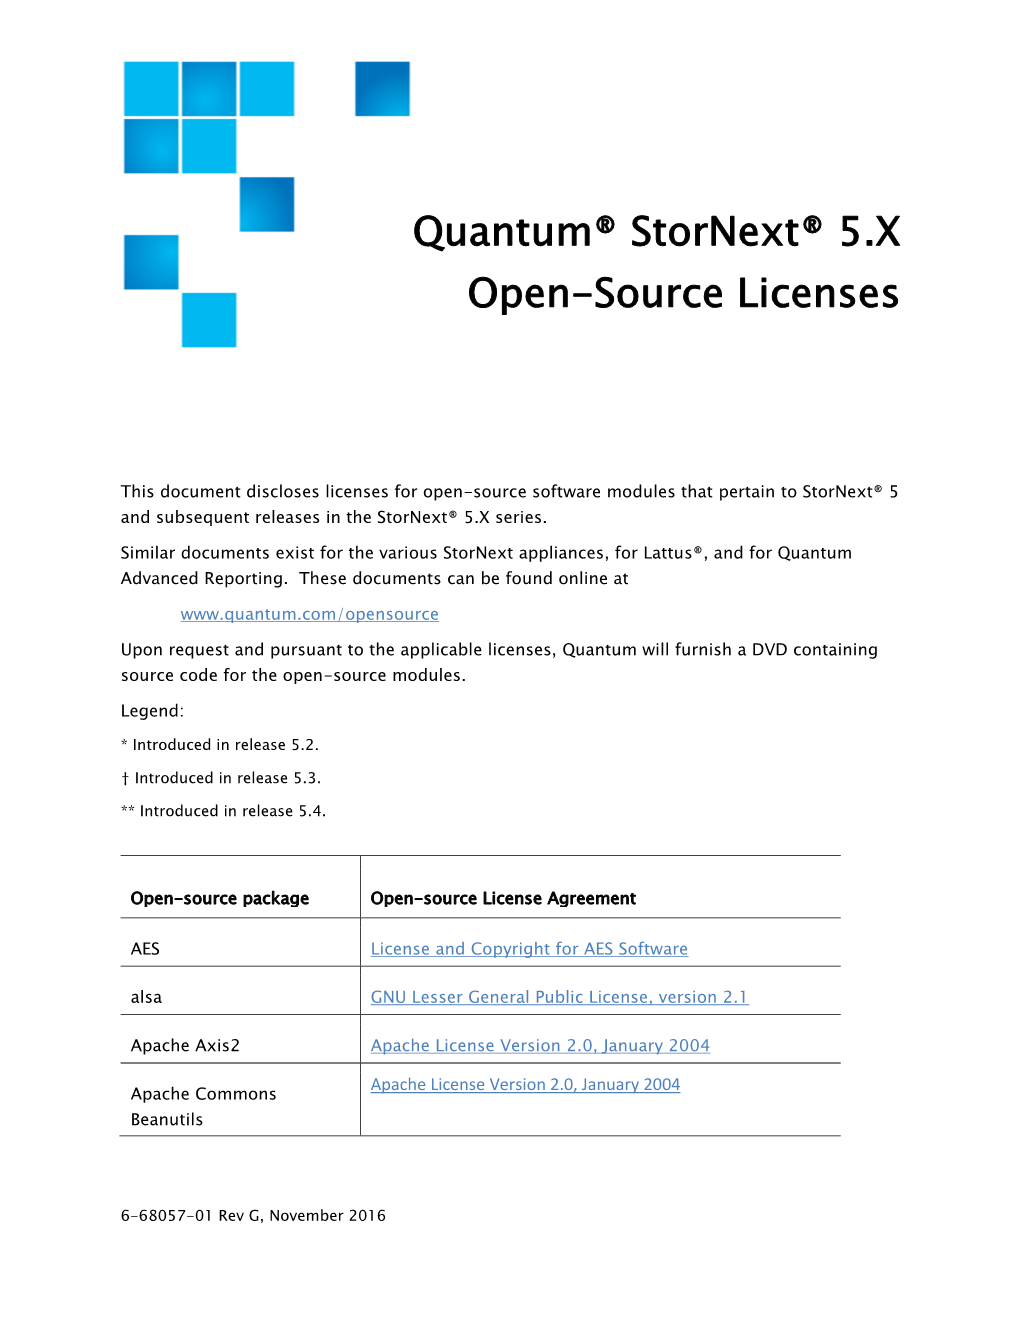 Stornext 5 Open Source Licenses